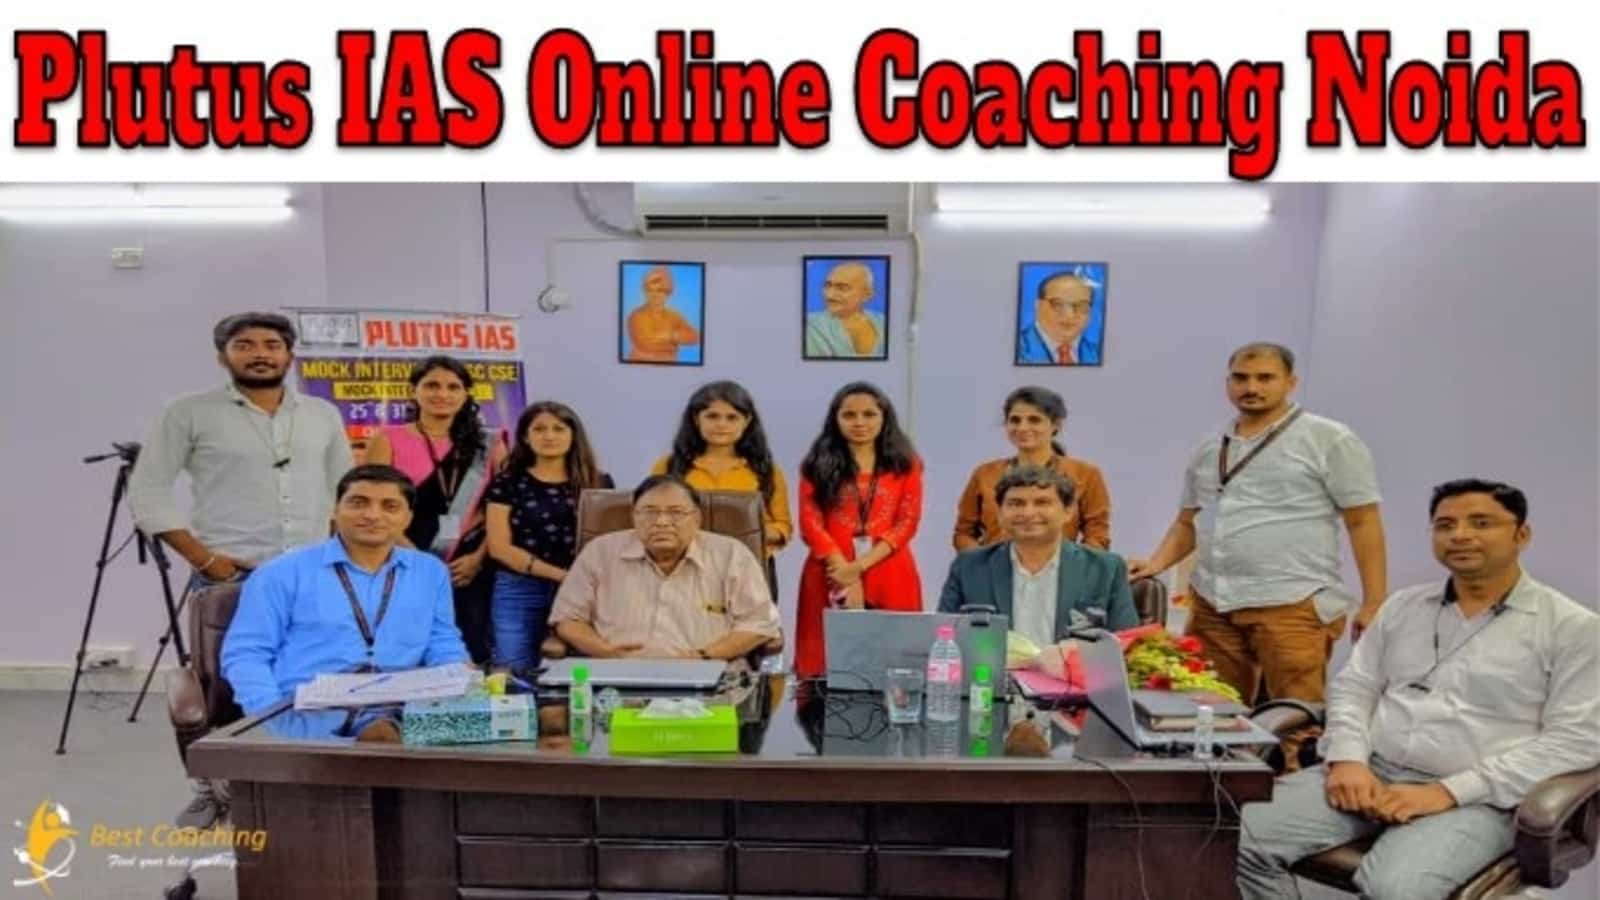 Plutus IAS Online Coaching Noida